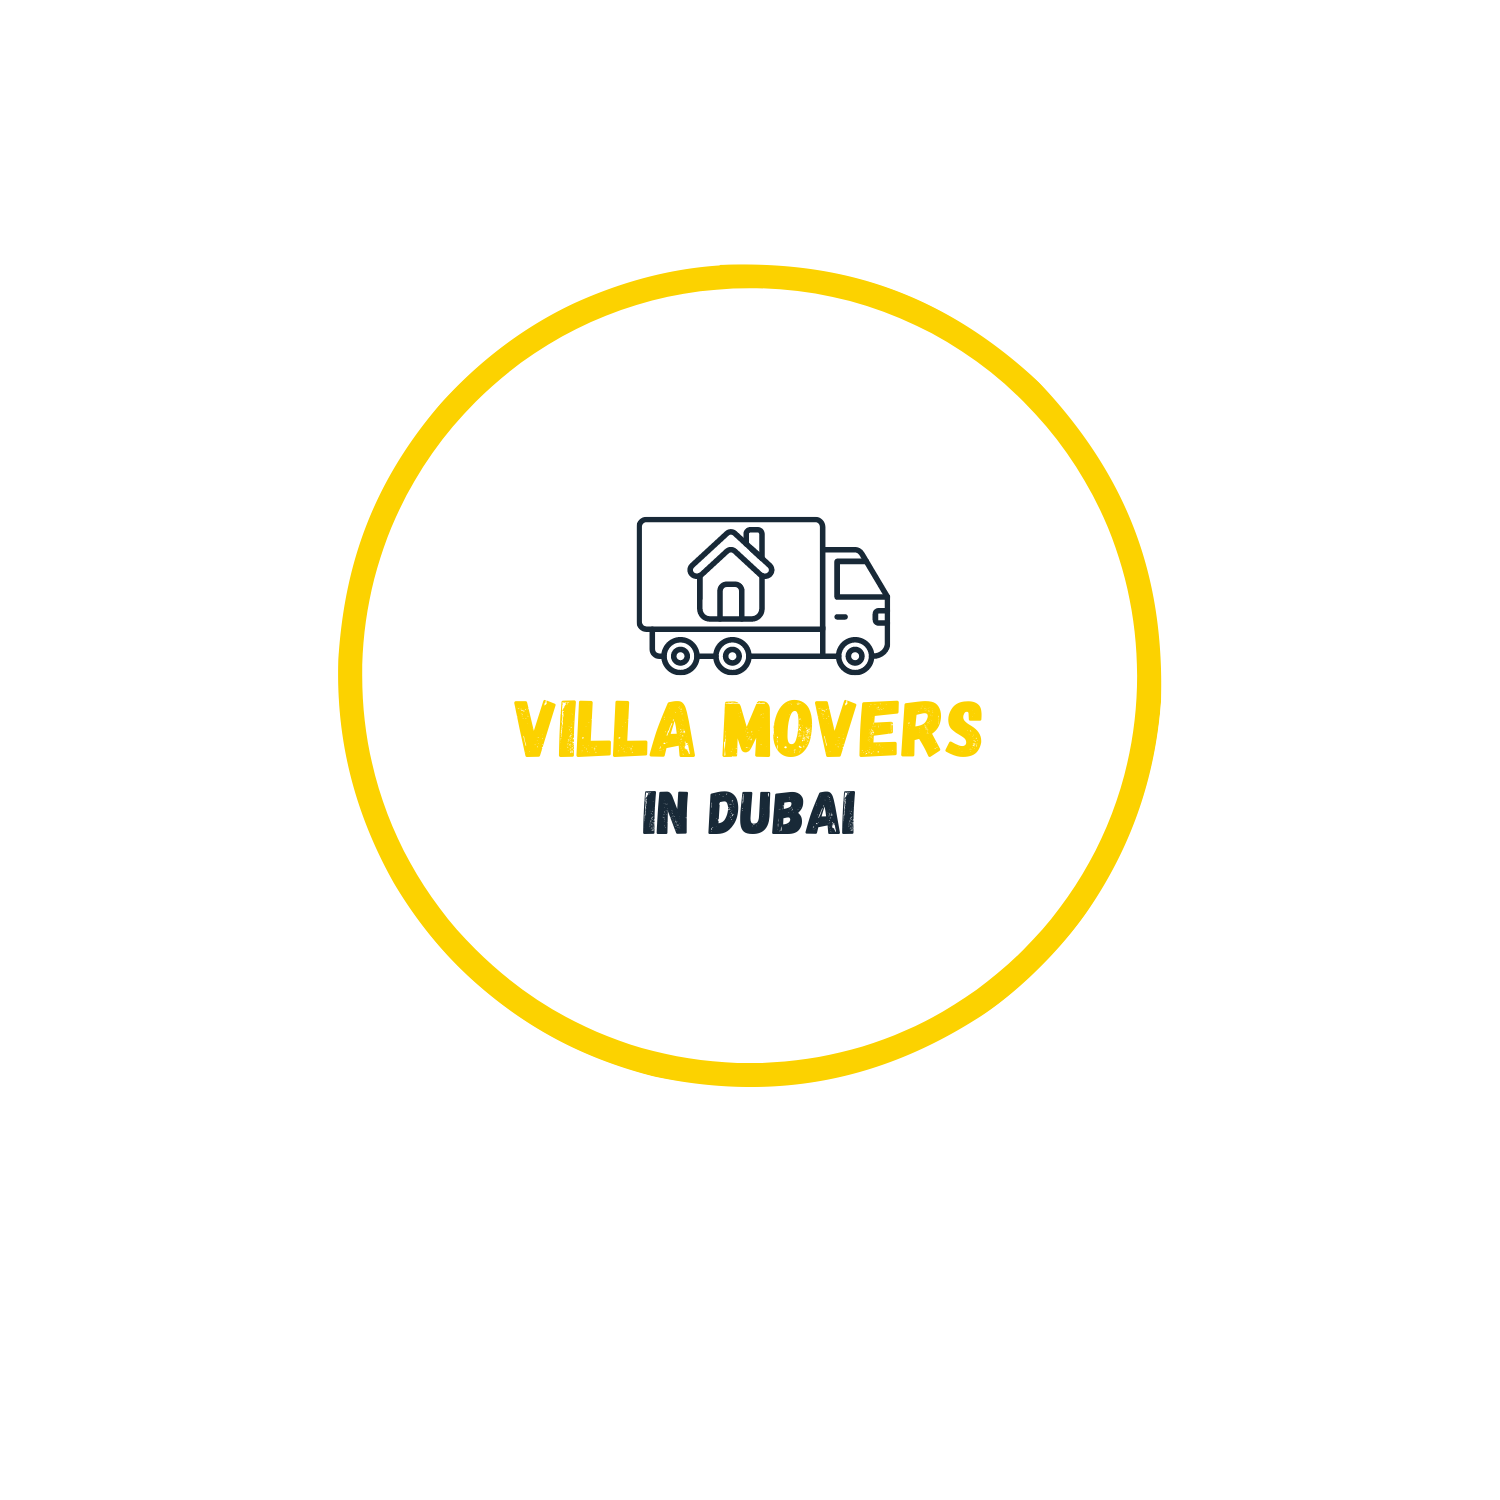 Villa movers in dubai logo 1